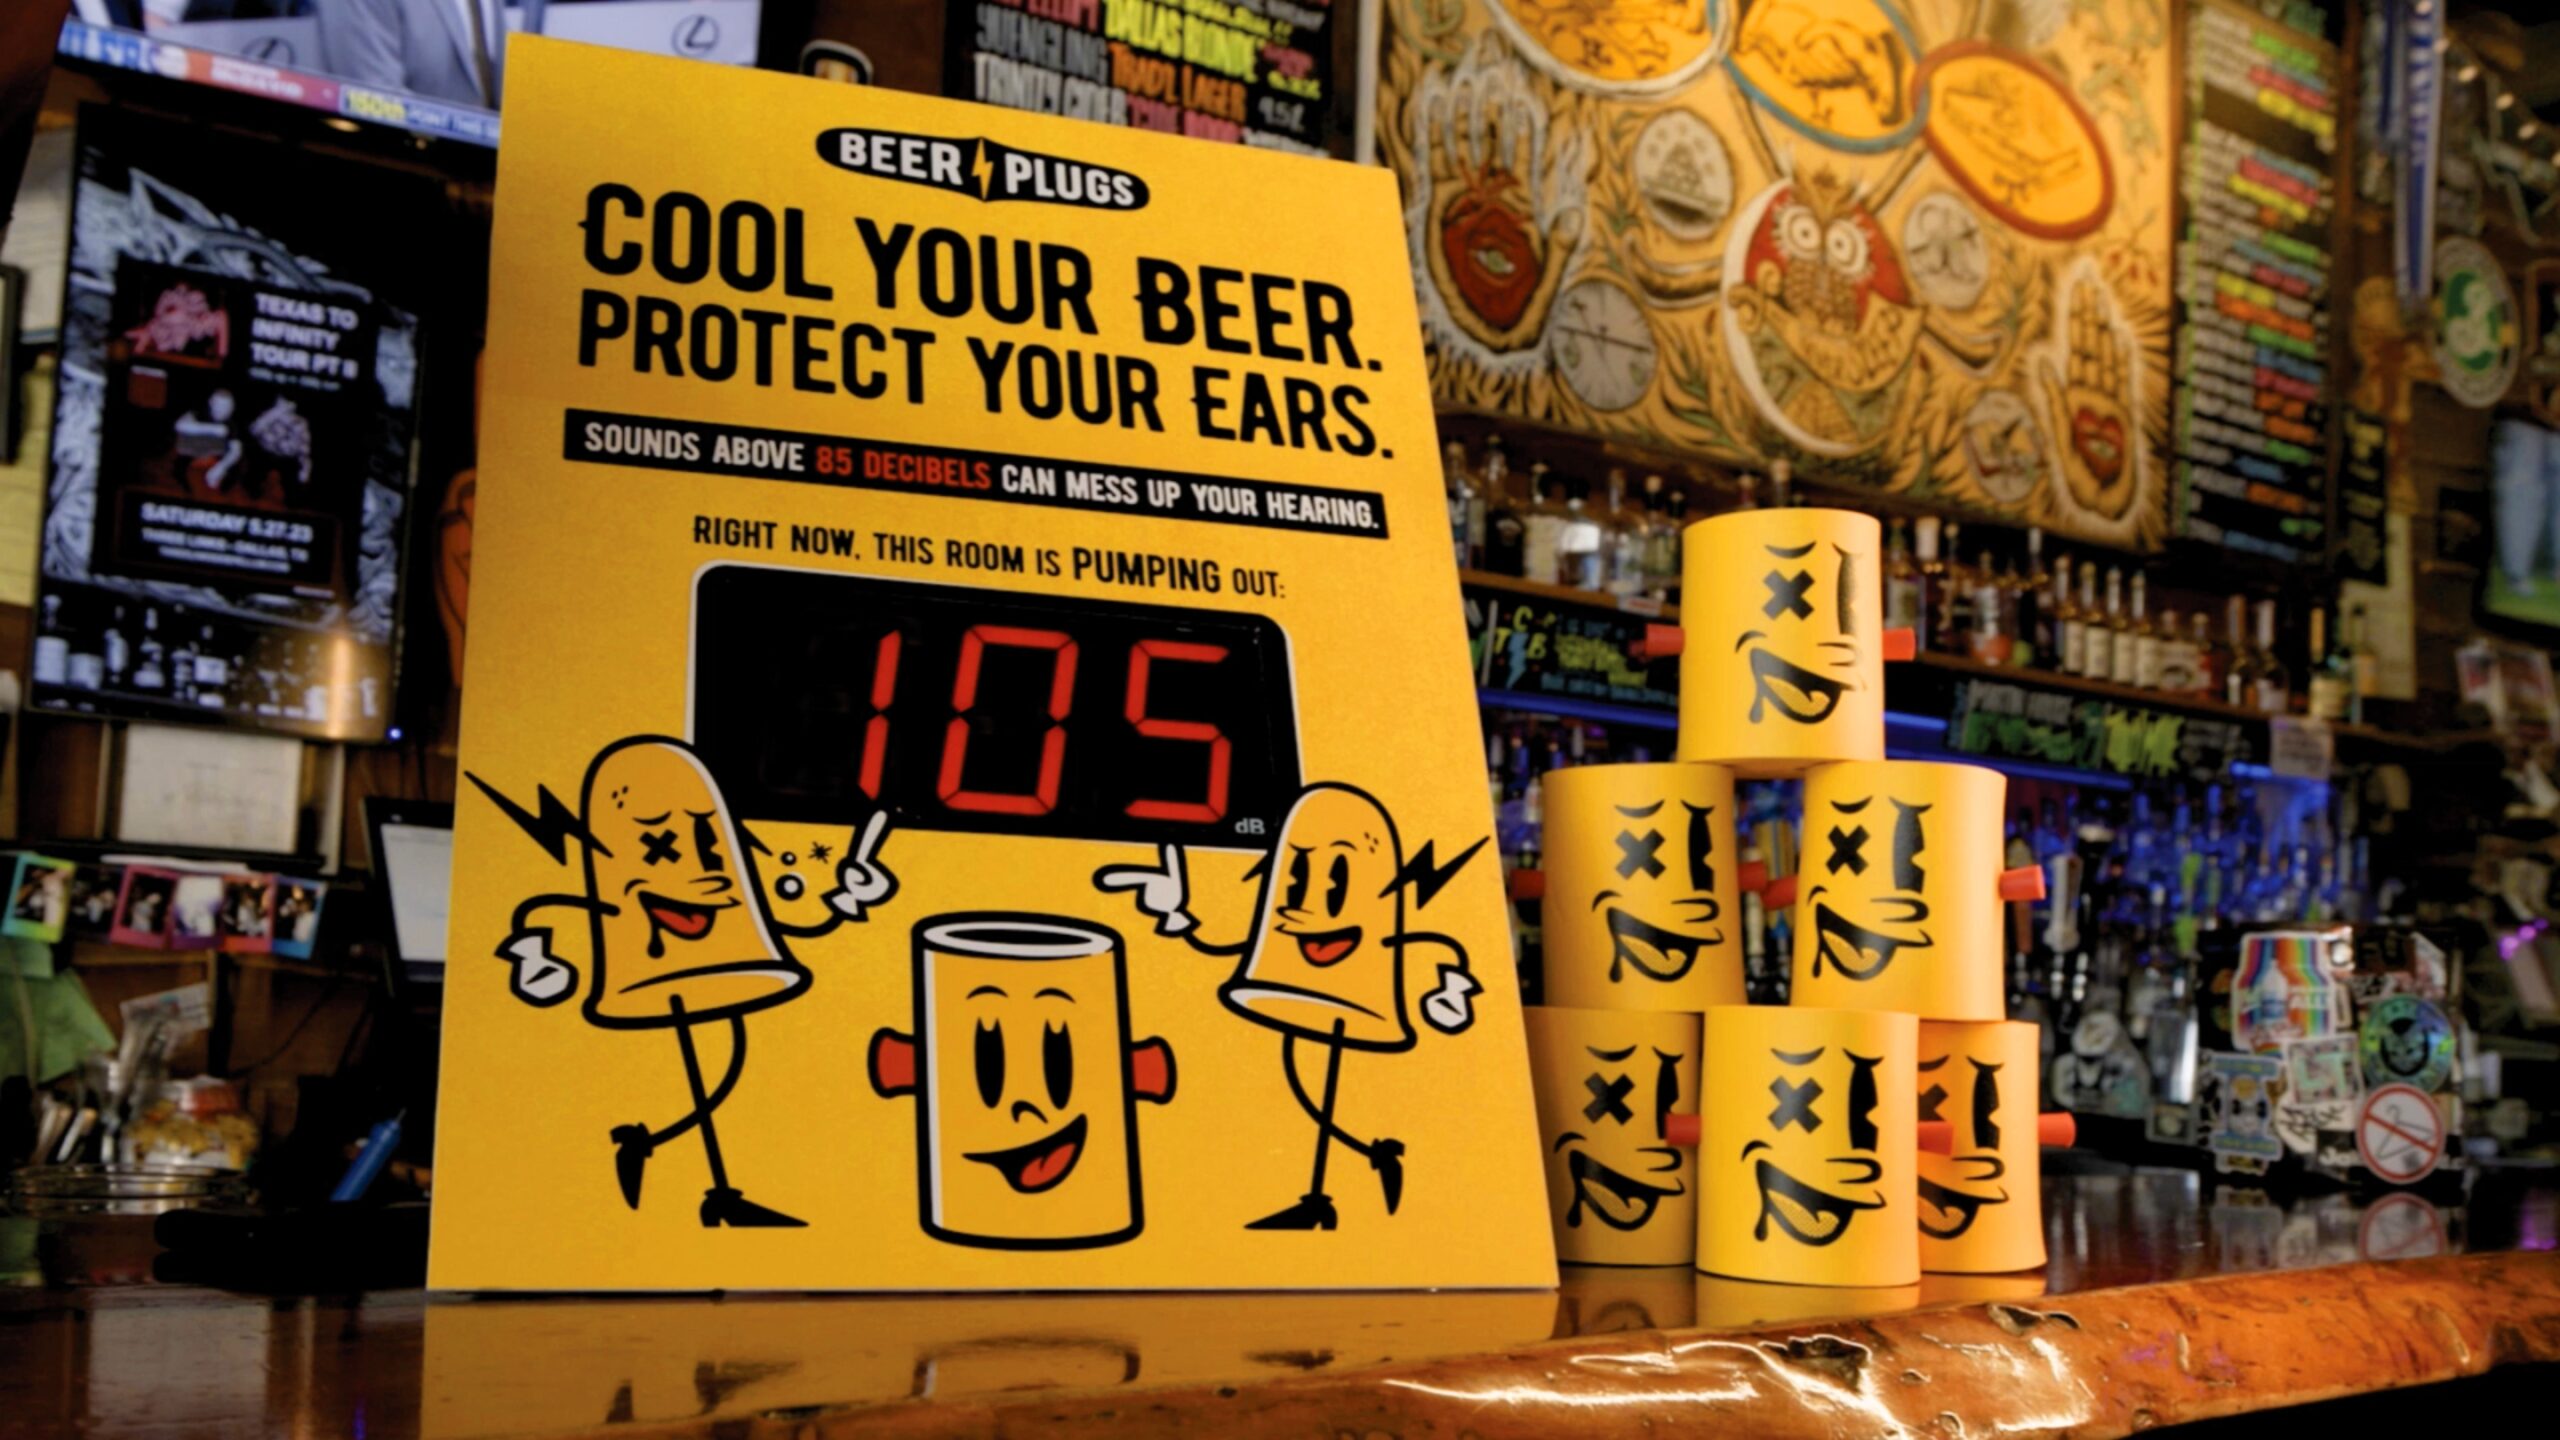 Beer Plugs Cool Your Beer